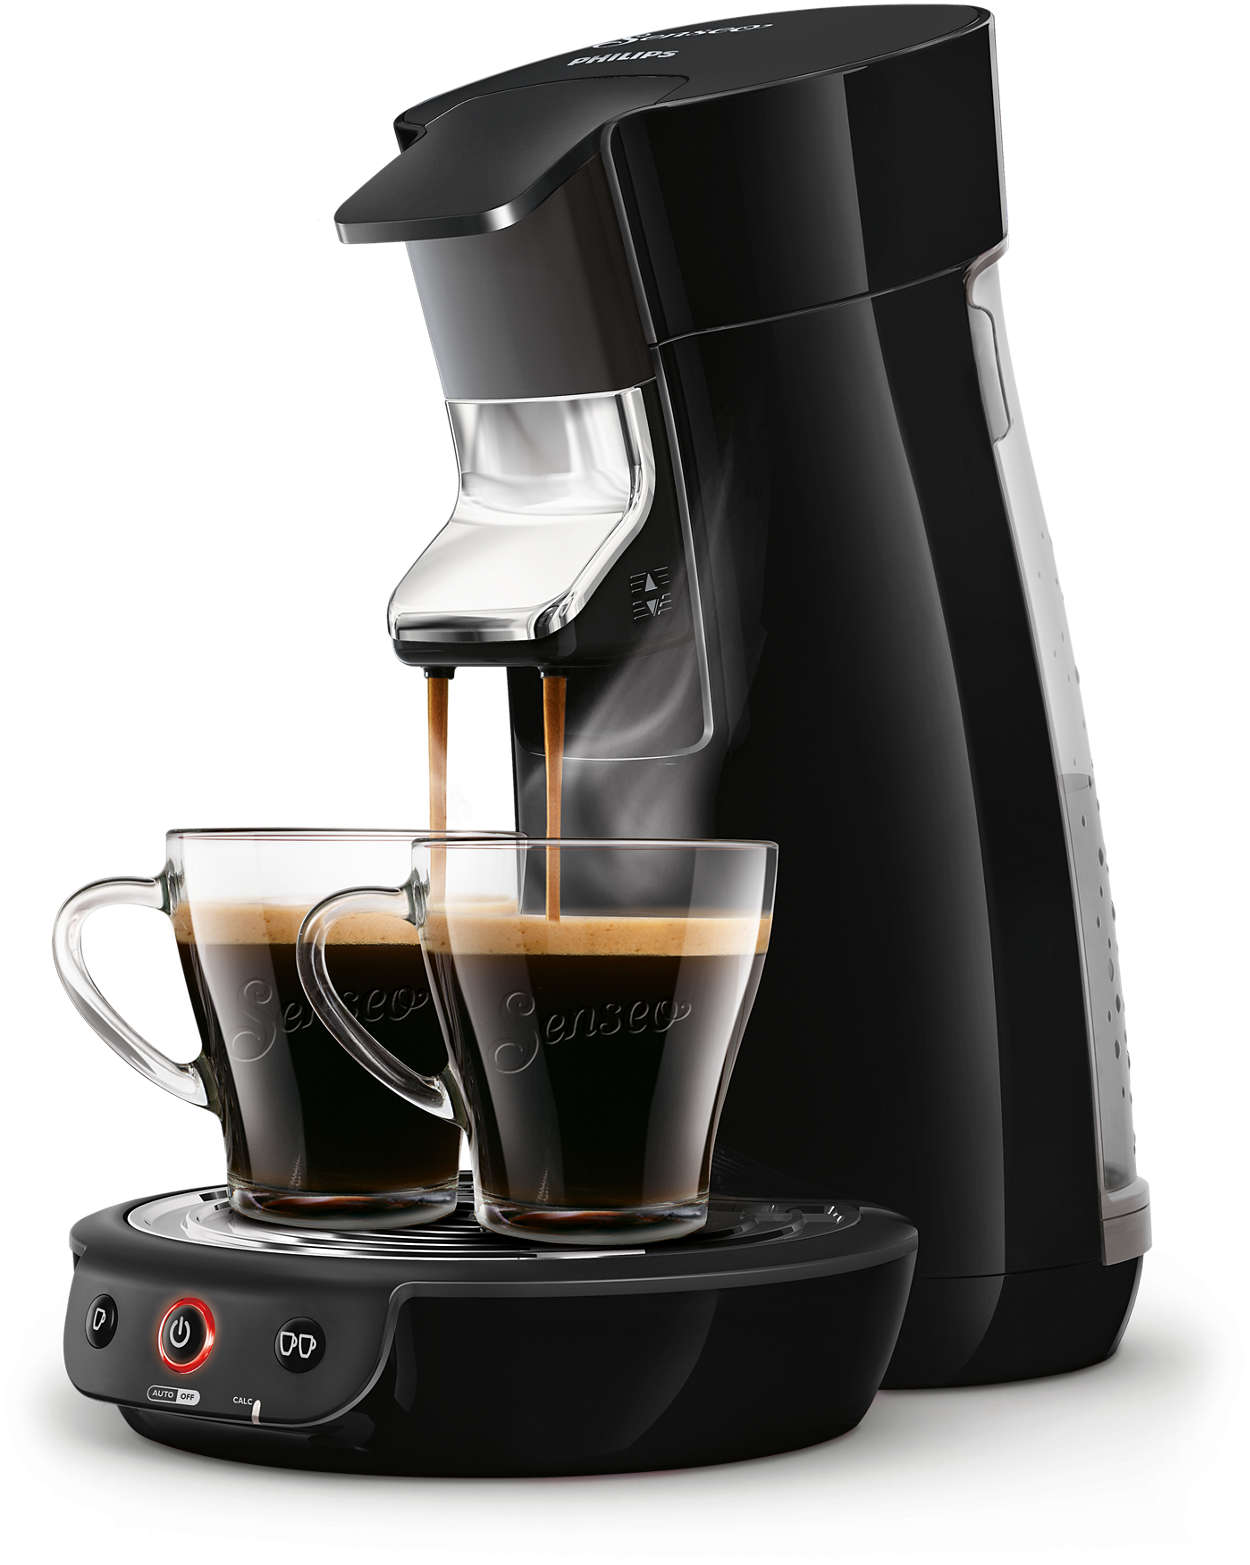 macchina per caffè con cialde tecnologia Kaffee Boost nera Senseo HD7829/60 Viva Café 